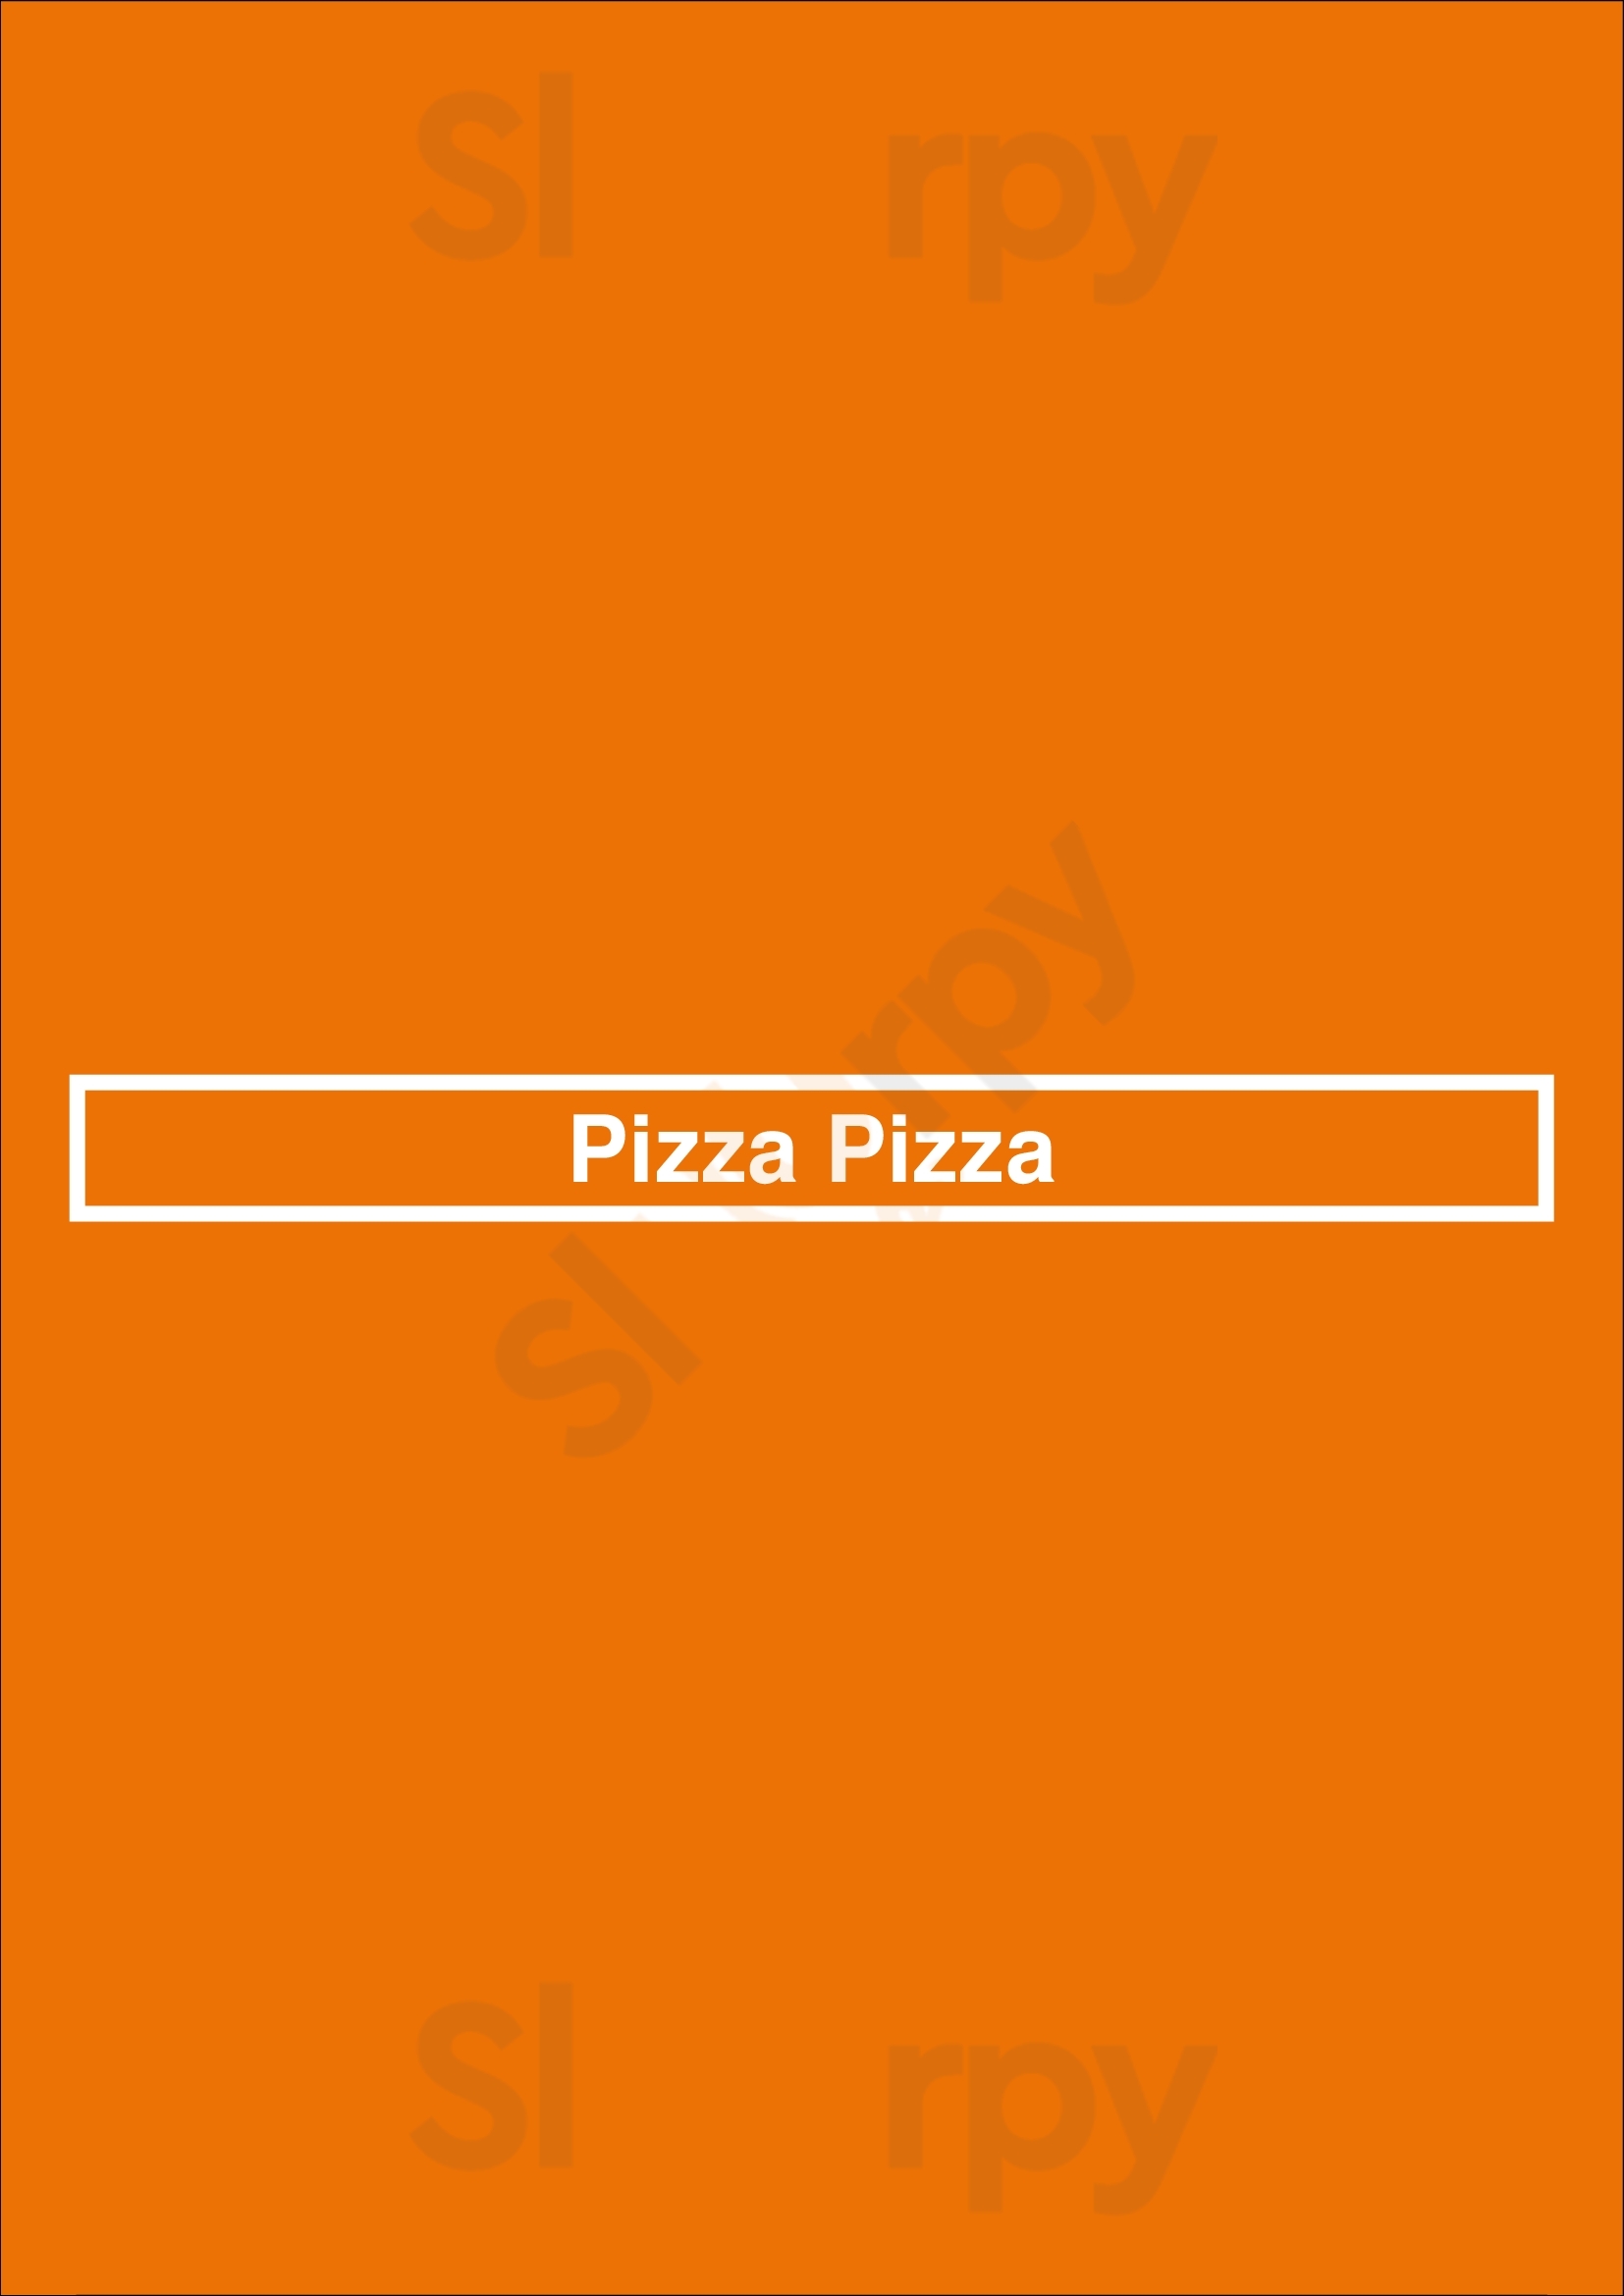 Pizza Pizza London Menu - 1